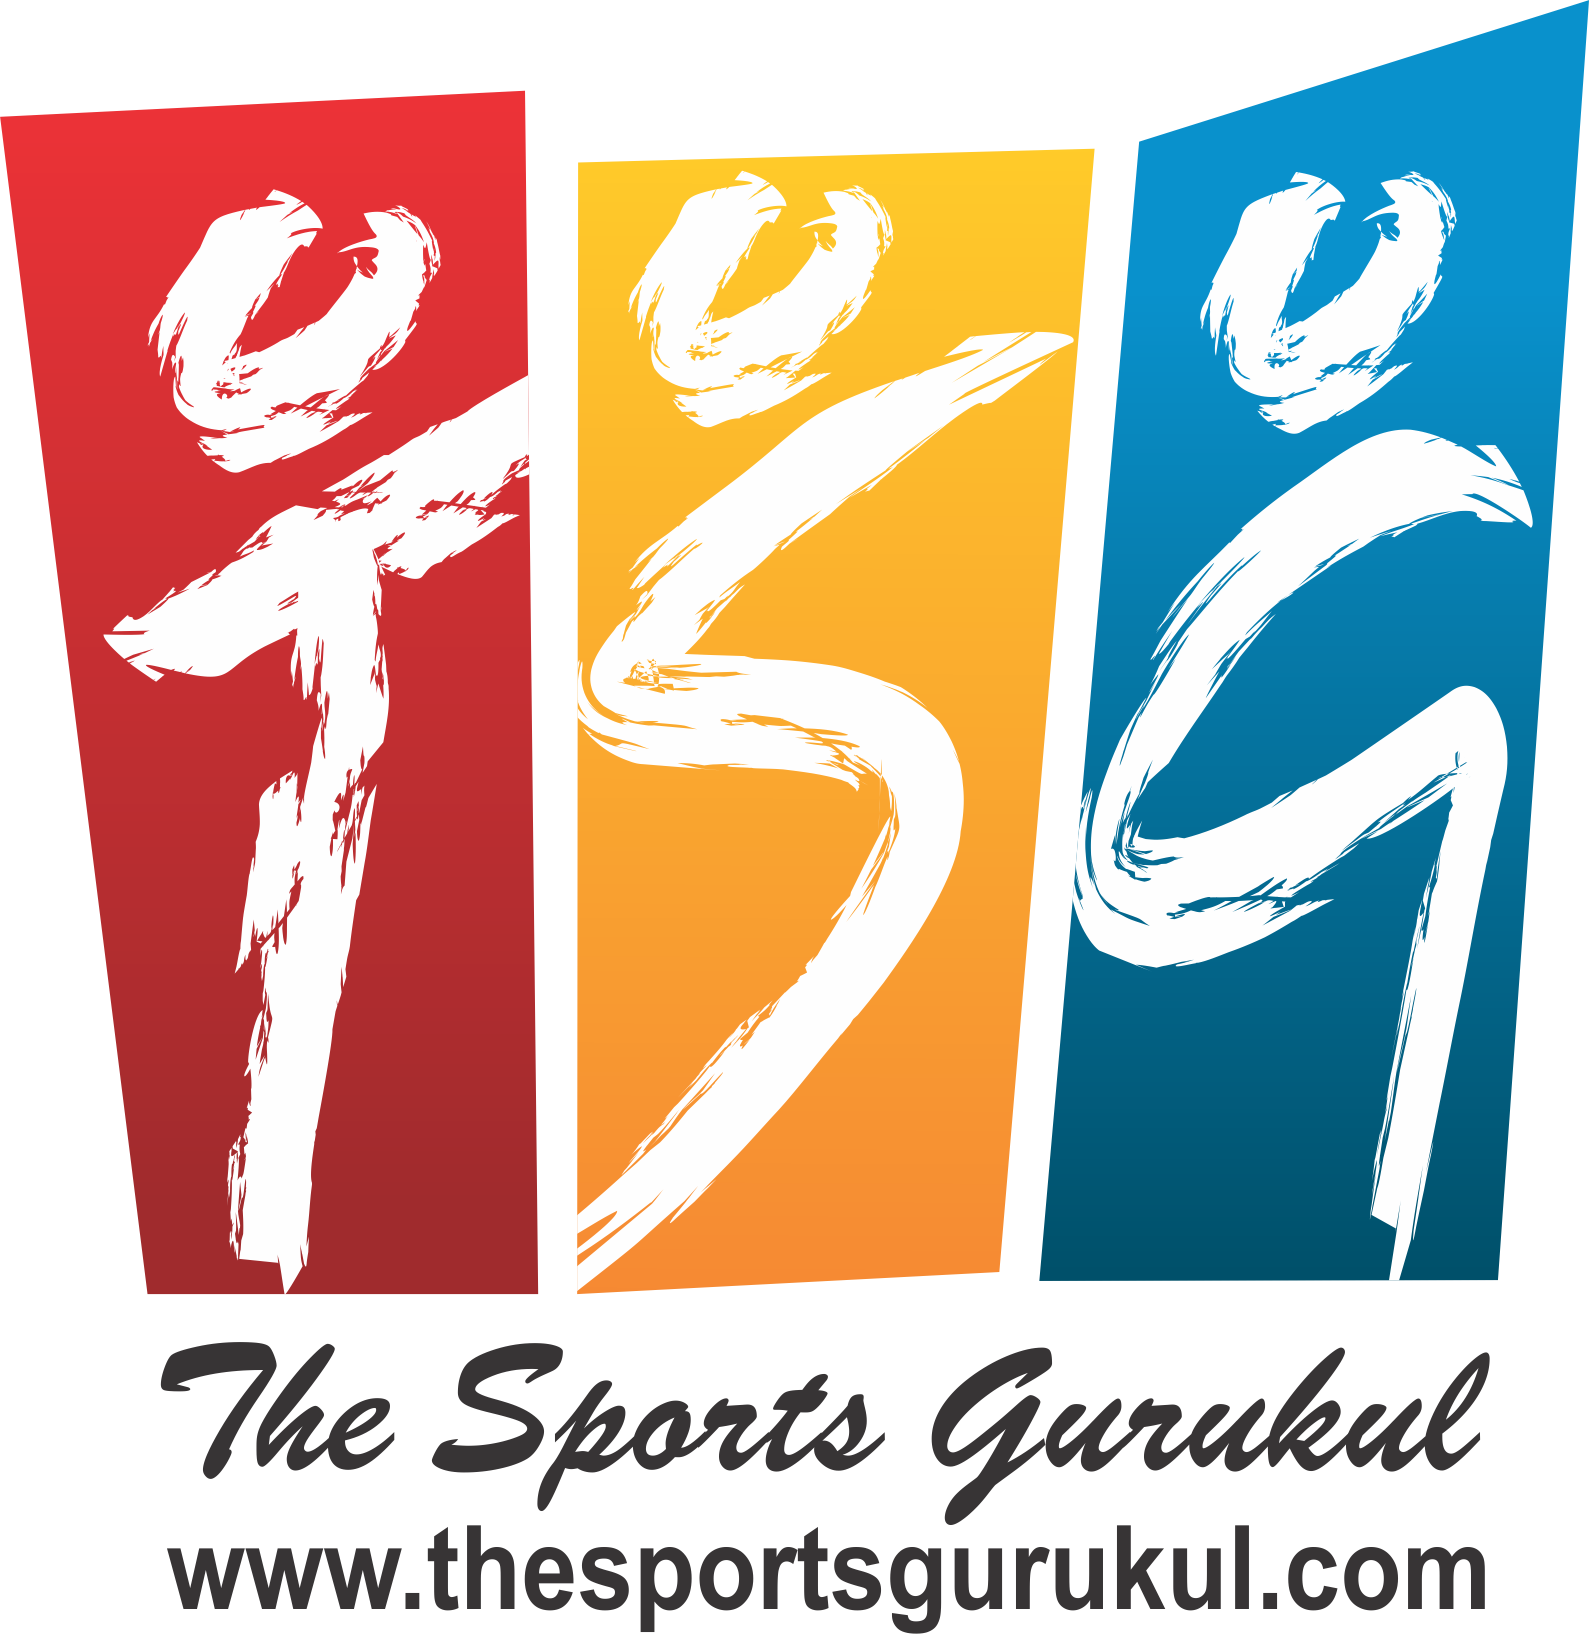 The Sports Gurukul - The Sports Gurukul (1590x1634)